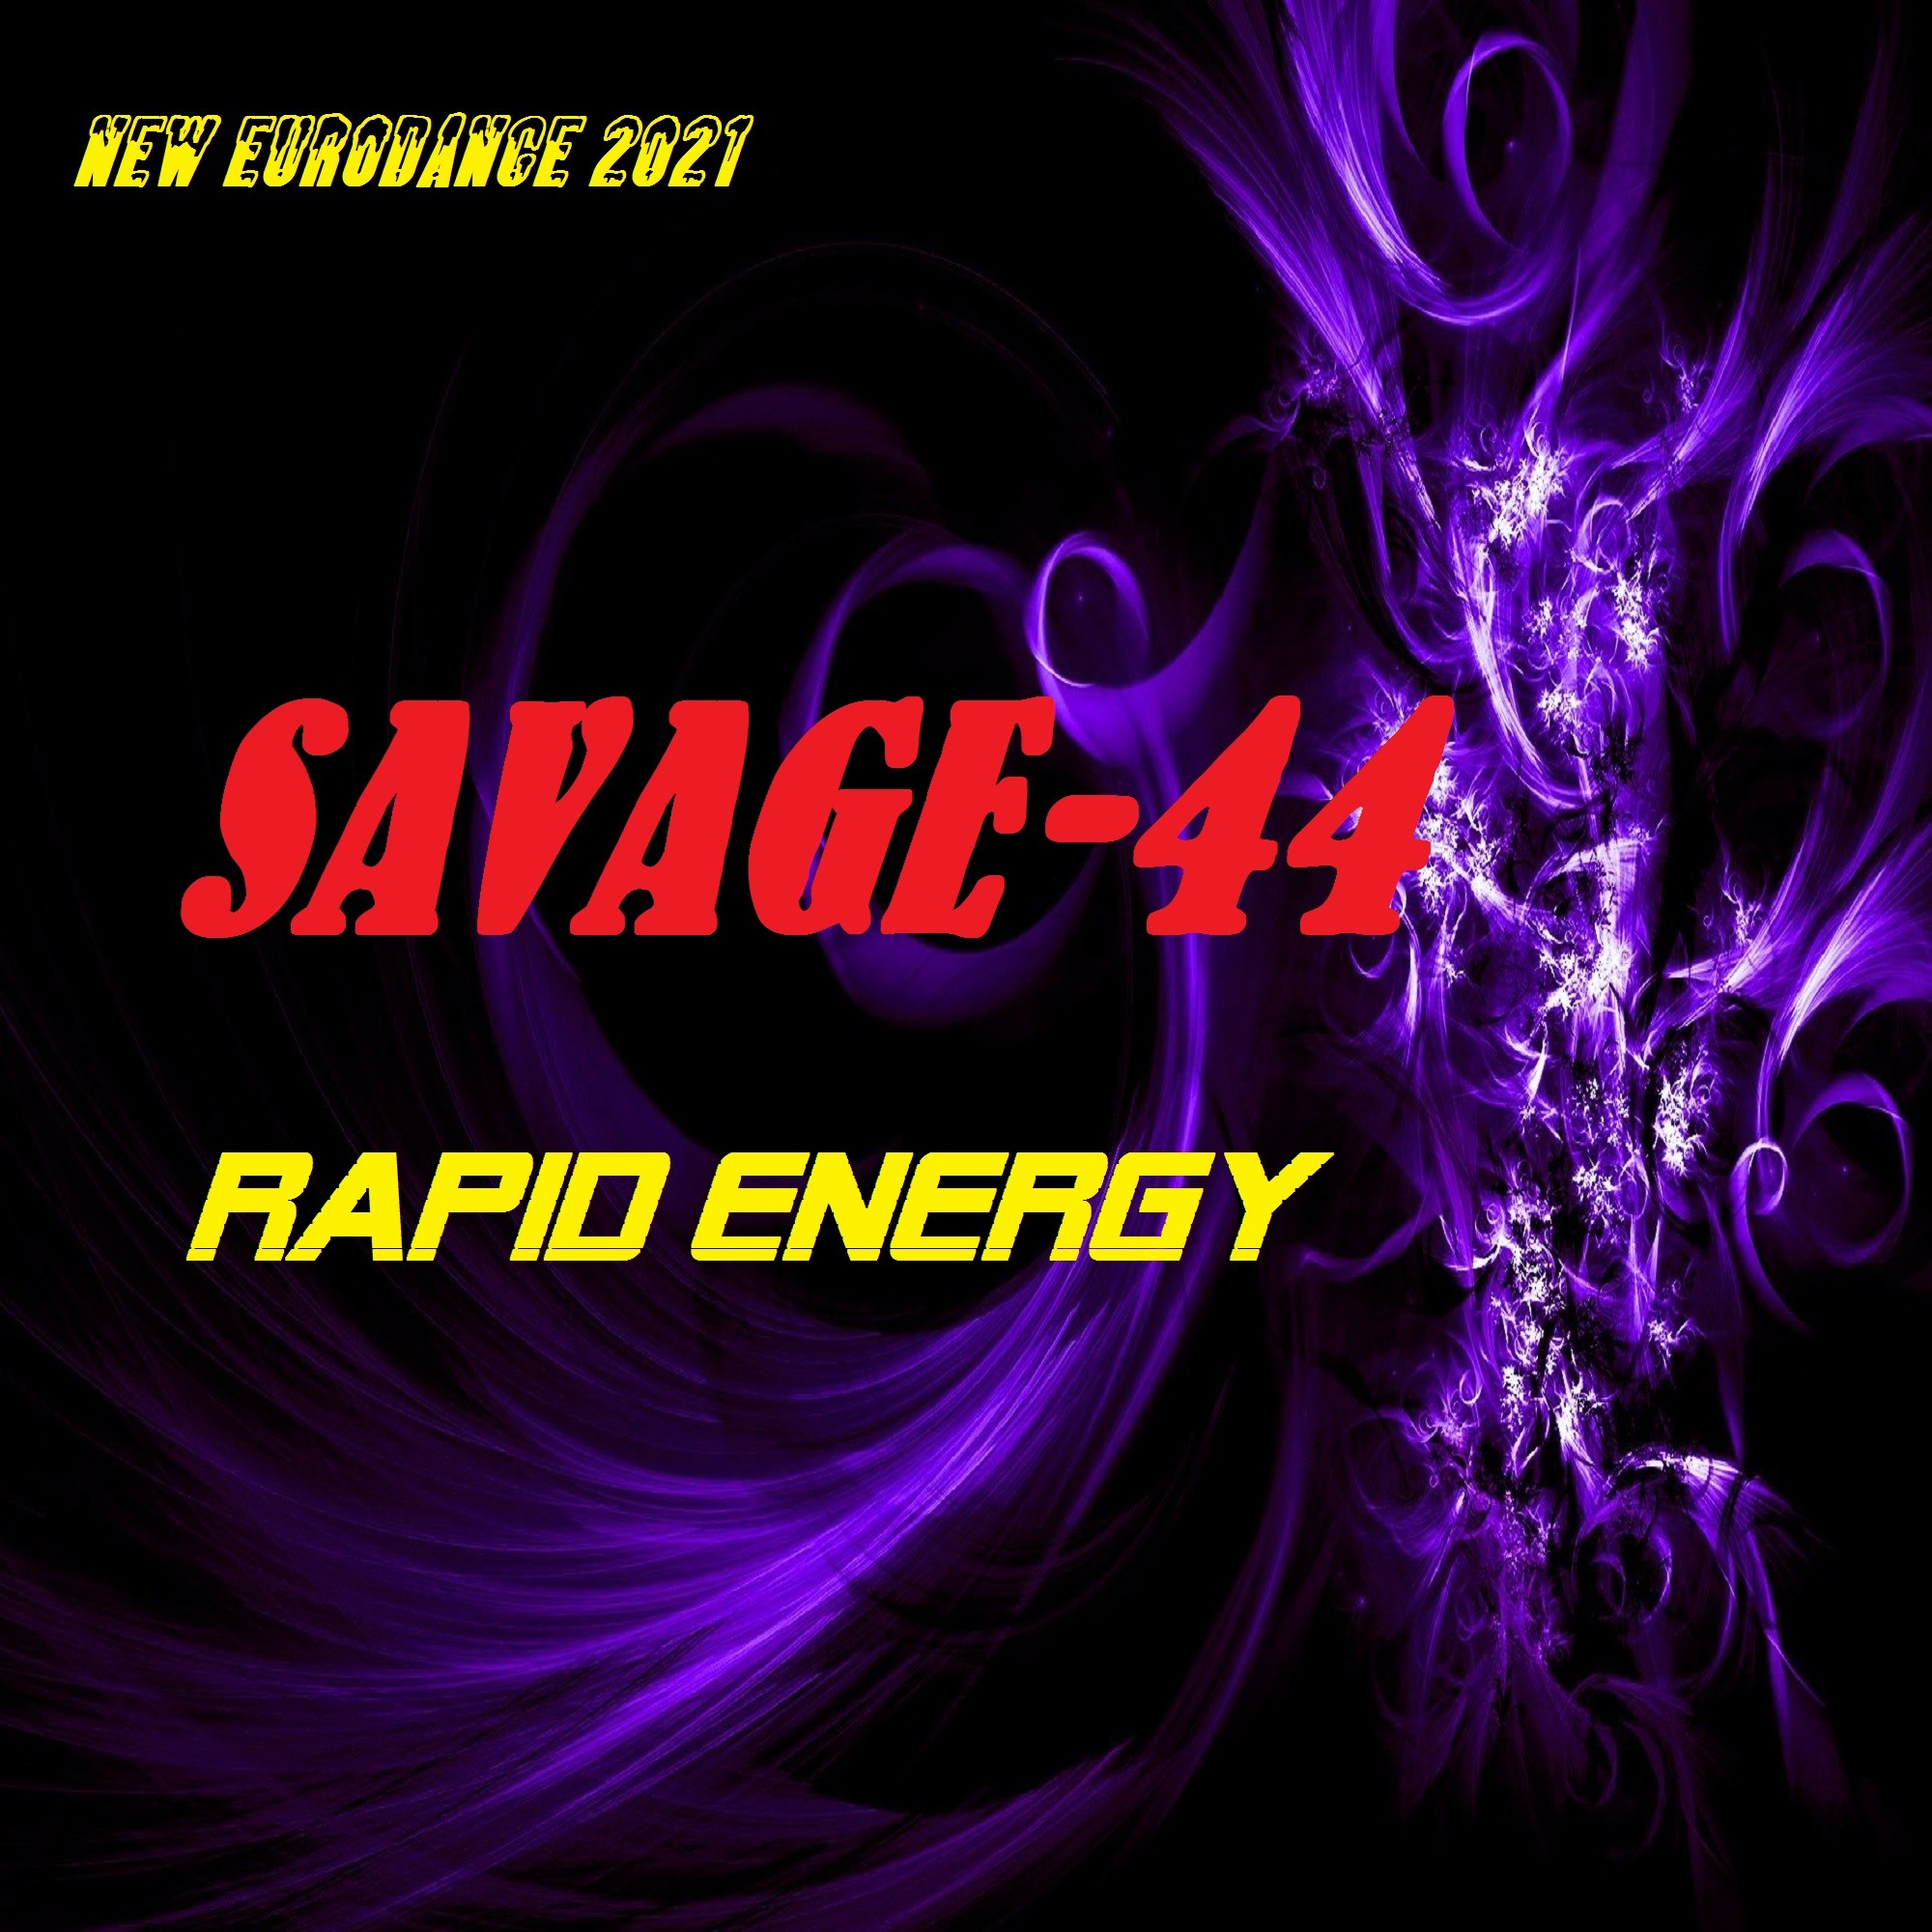 Savage 44 the music ring new. Savage-44 - Rapid Energy (Eurodance Version). Savage -44 - Rapid Energy New Eurodance Music 2021. Savage 44. Саваж 44 Евроданс.